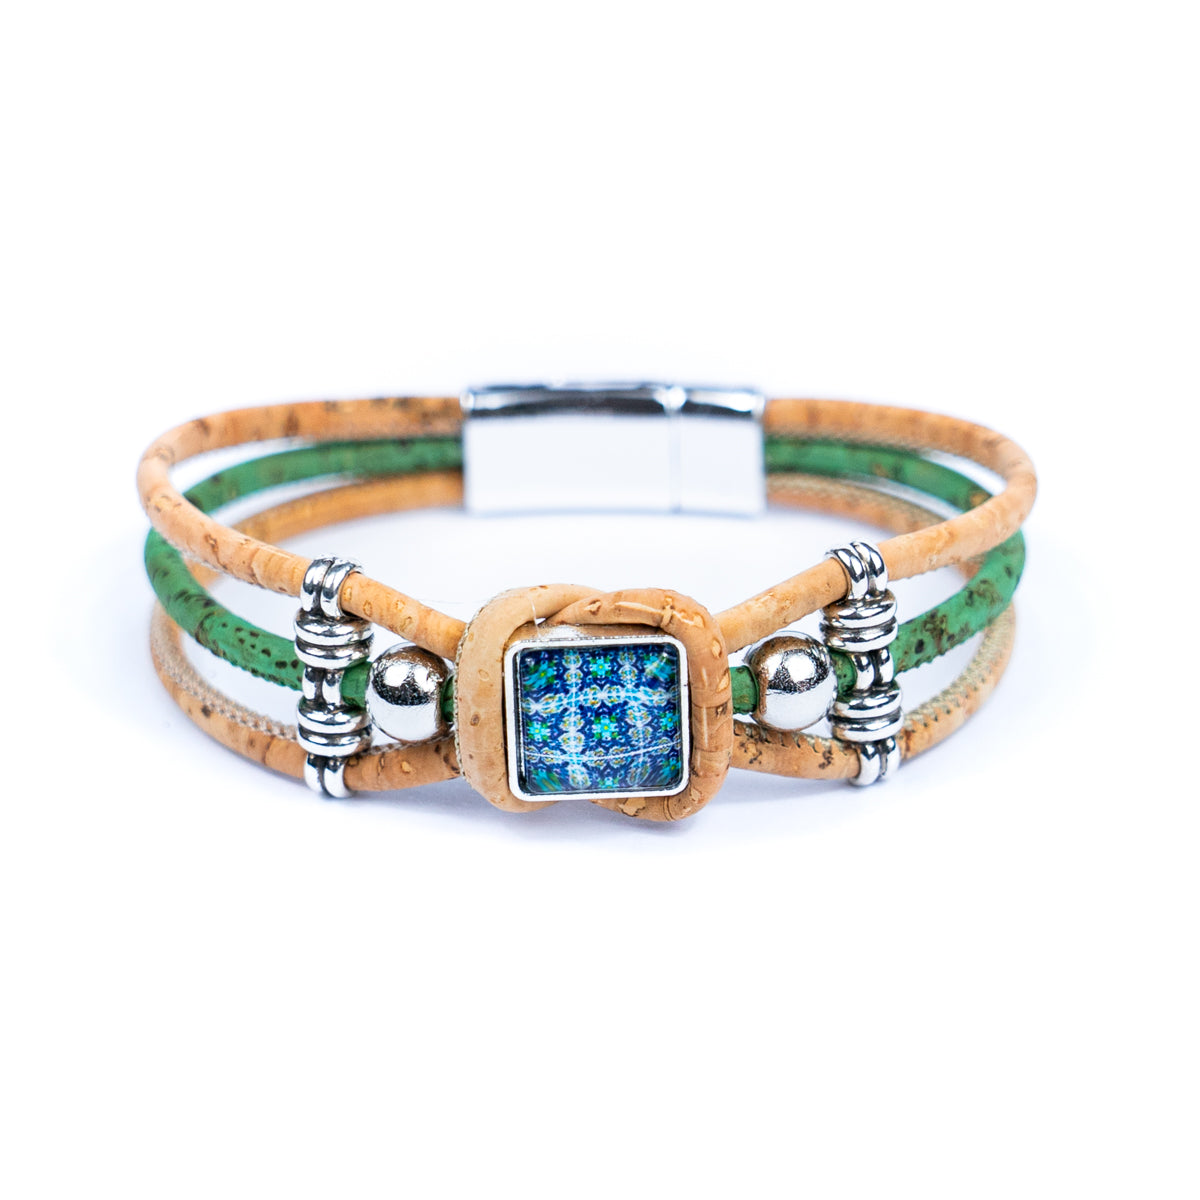 Handmade Colorful Cork Bracelet for Women BR-515-MIX-5